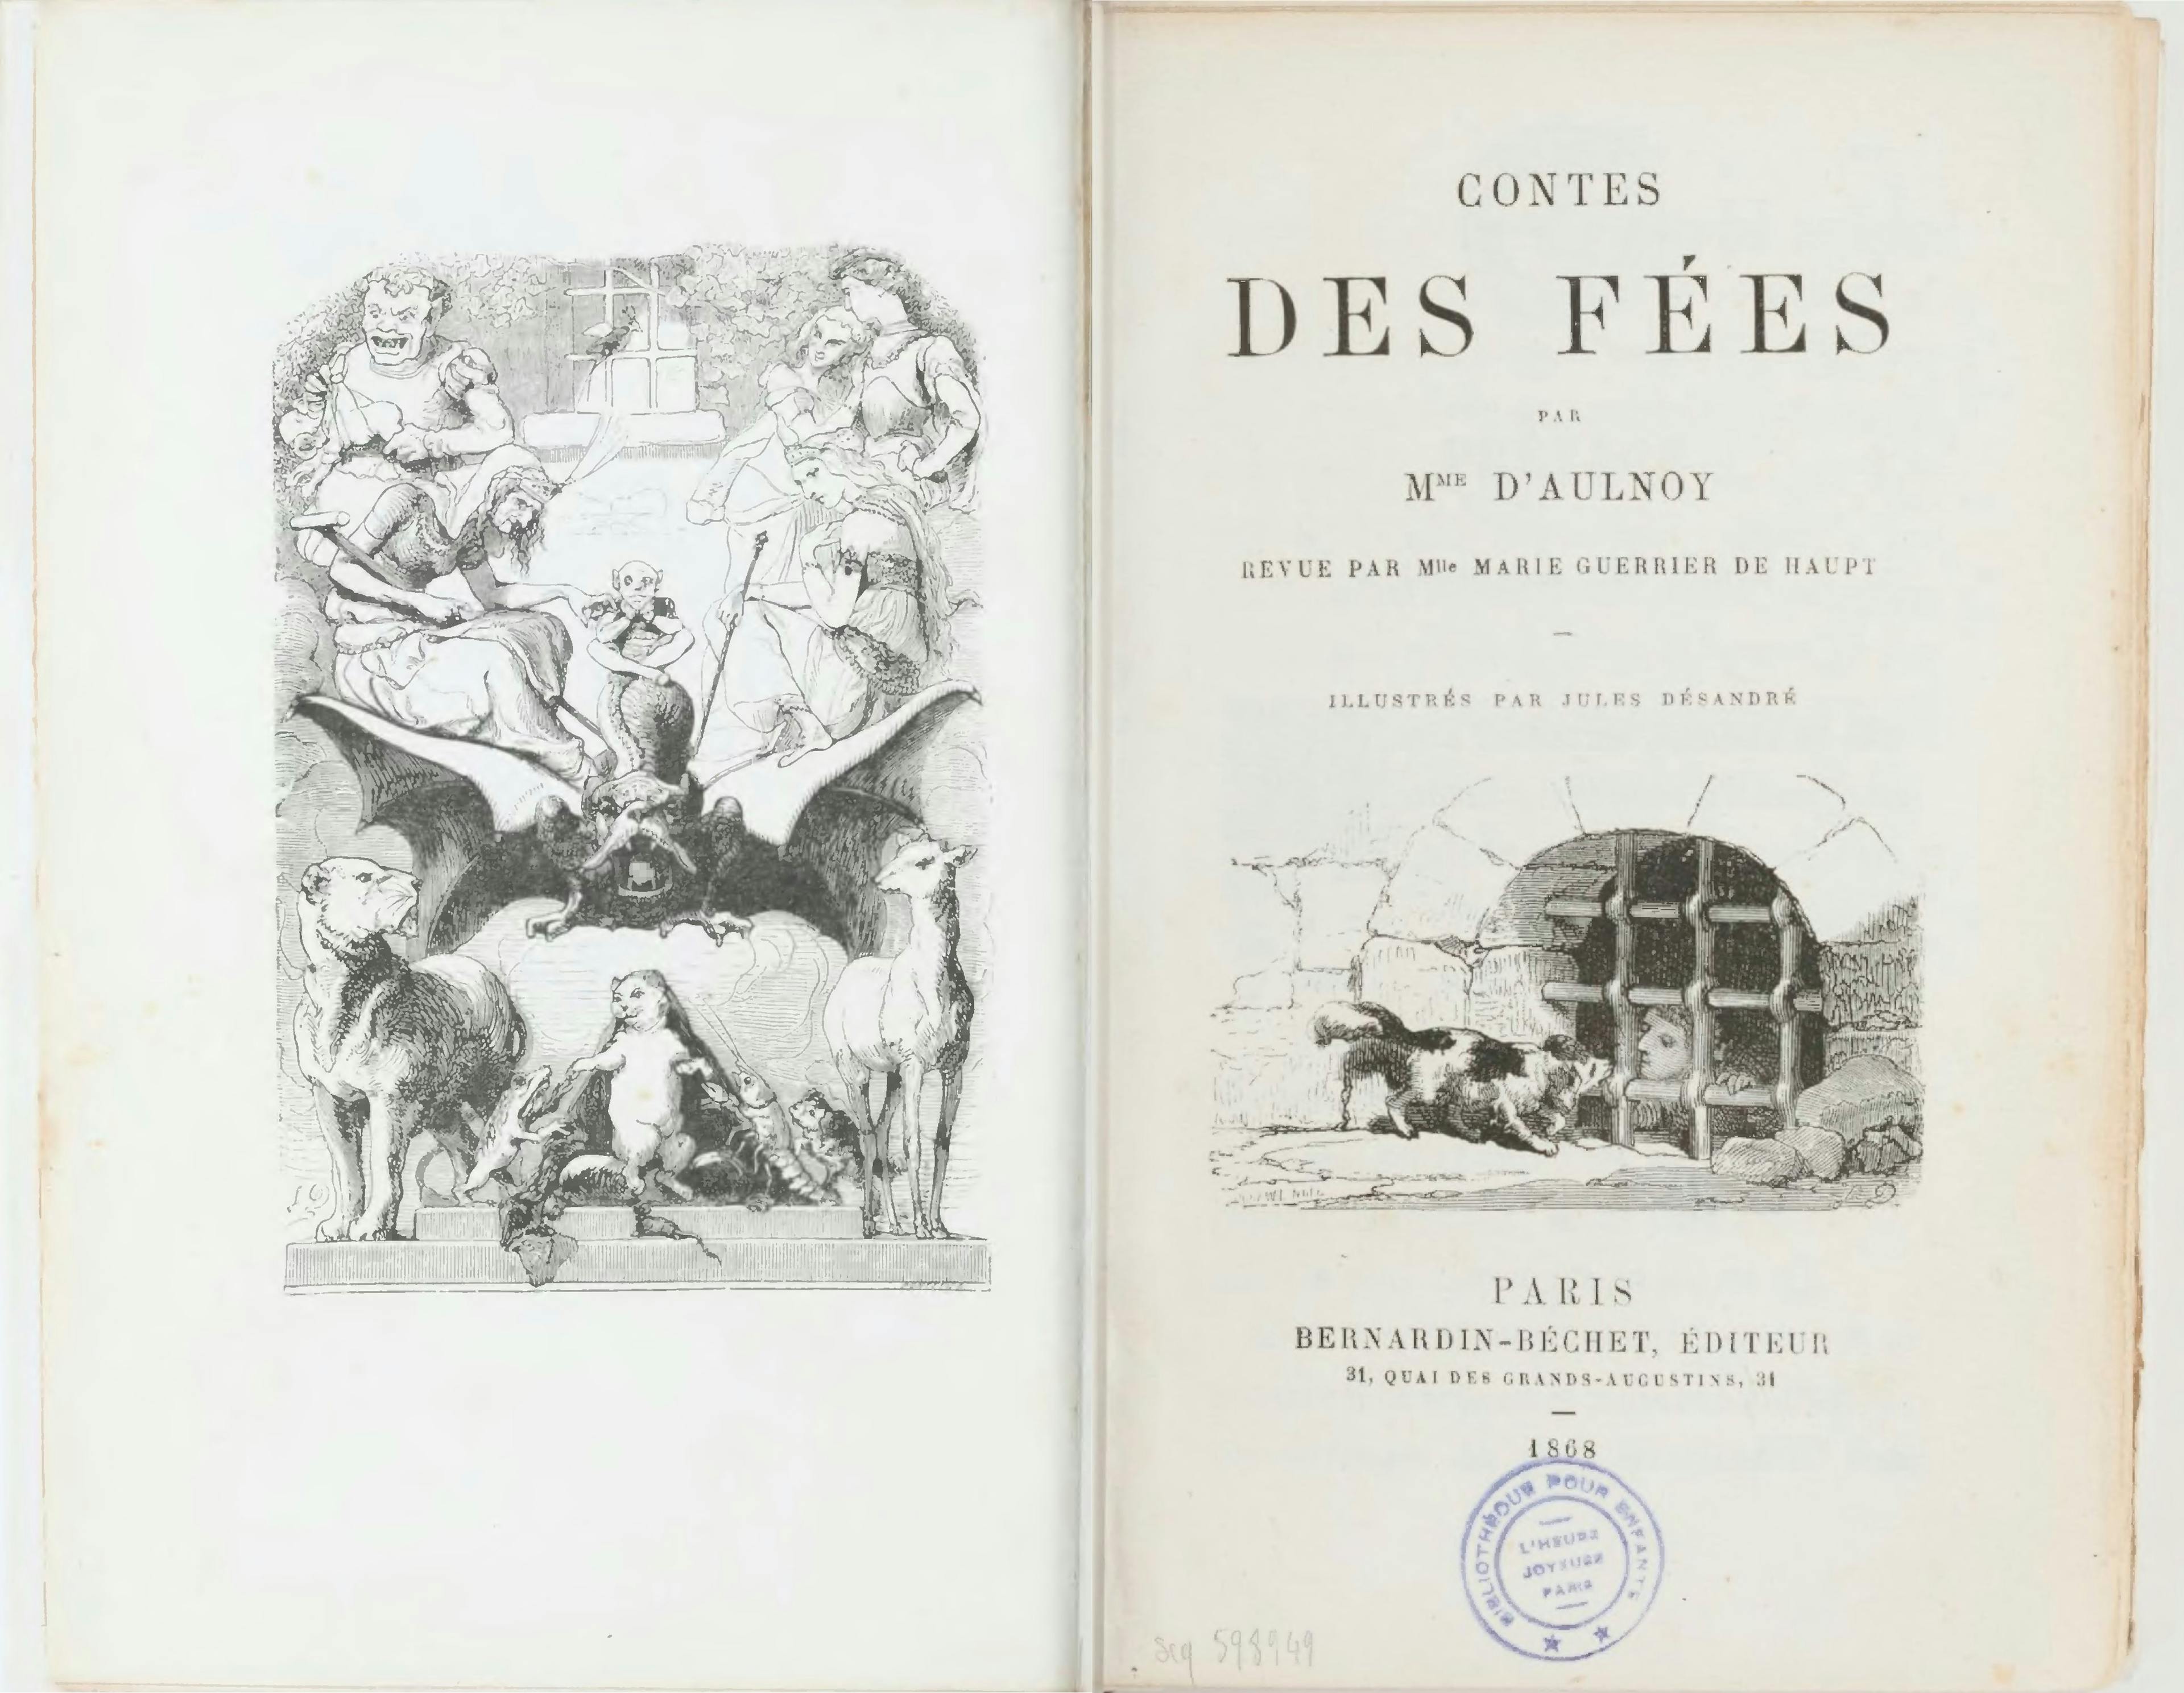 Title page & frontispiece: 1868 edition of Contes des Fées, Madame d’Aulnoy